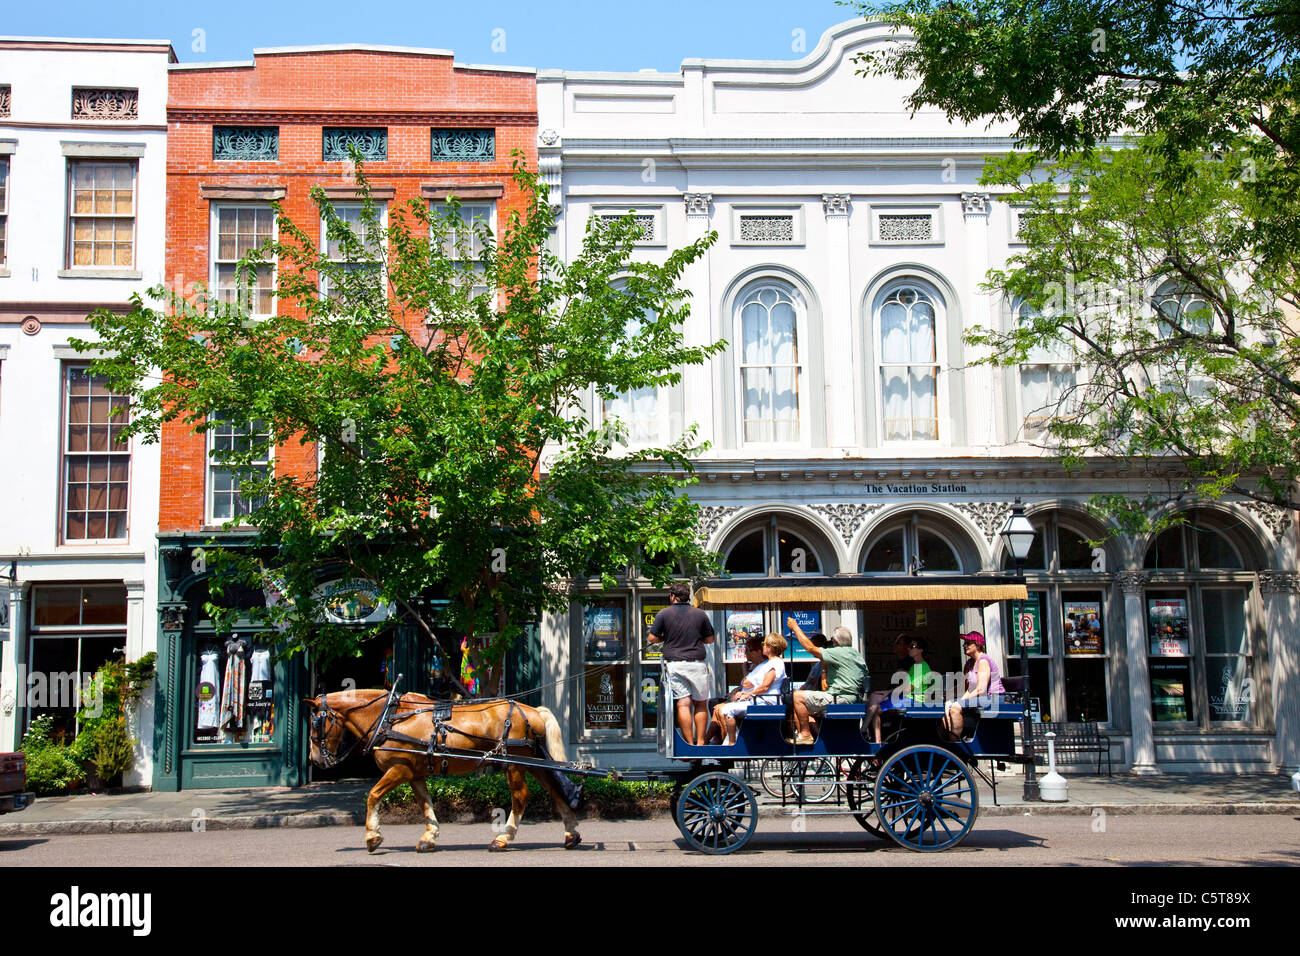 Horse Carriage tour of old Charleston, South Carolina Stock Photo